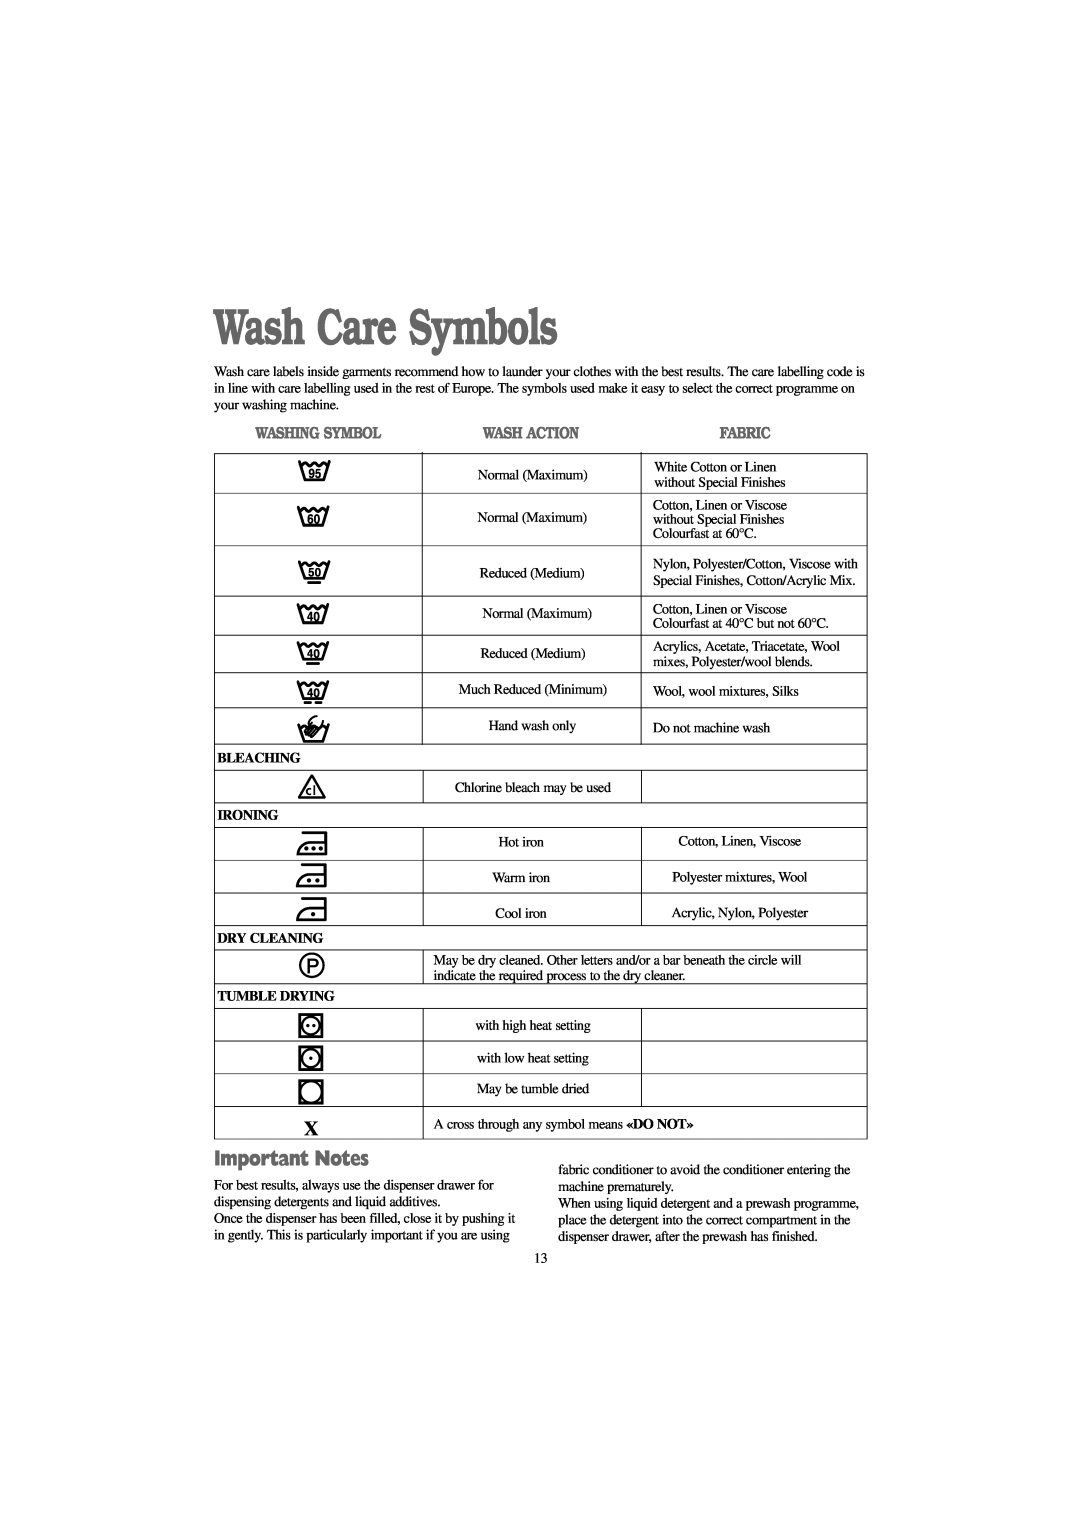 Tricity Bendix AW 900 W Wash Care Symbols, Important Notes, Washing Symbol, Wash Action, Fabric, Bleaching, Ironing 